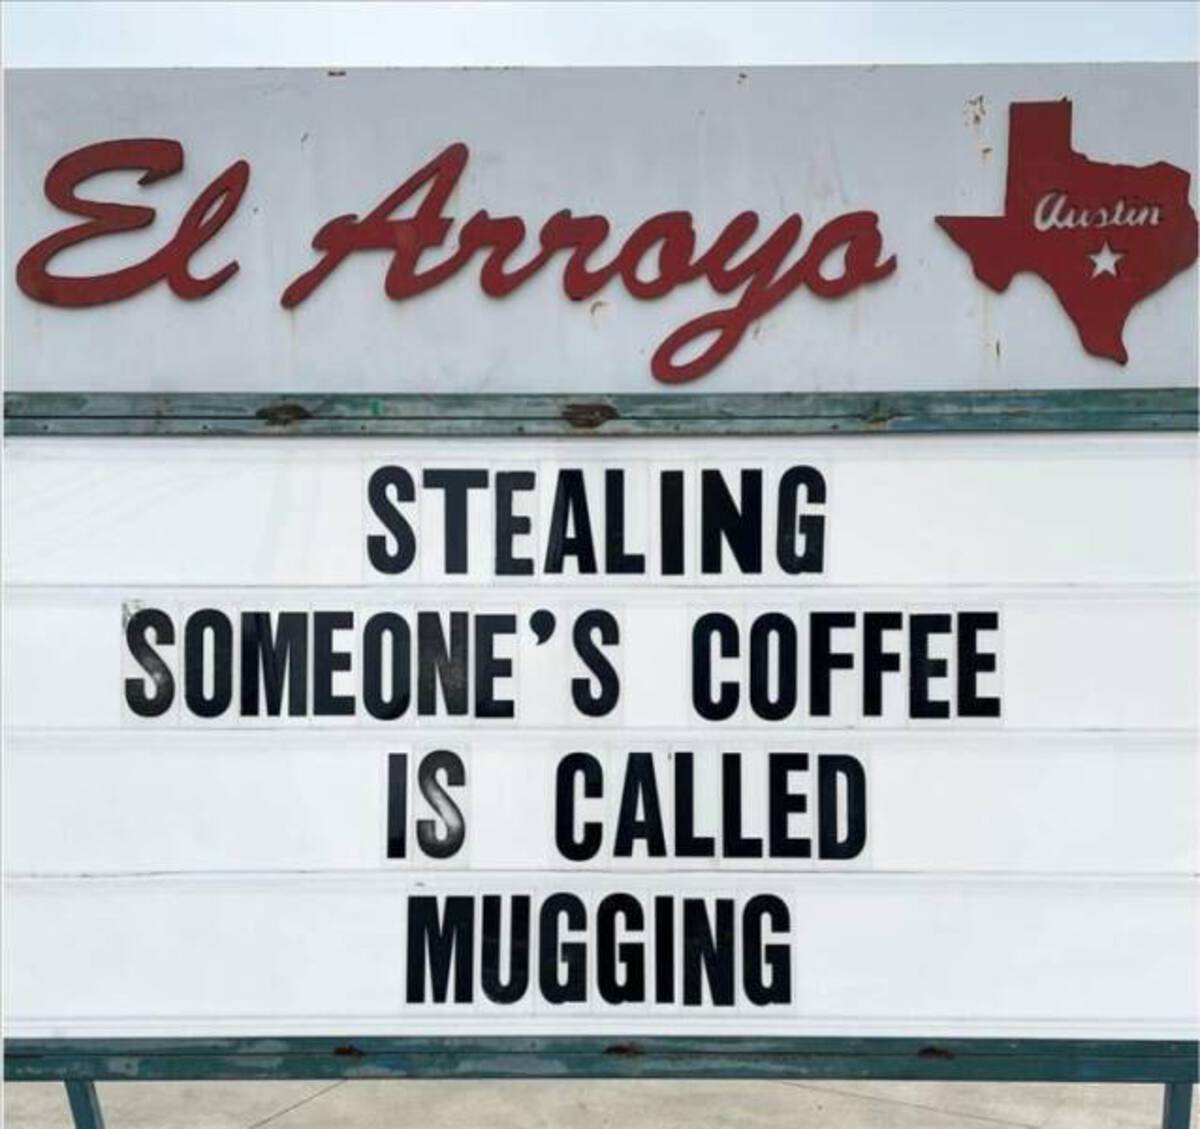 new coffee meme - El Arroyo Stealing Someone'S Coffee Is Called Mugging Austin